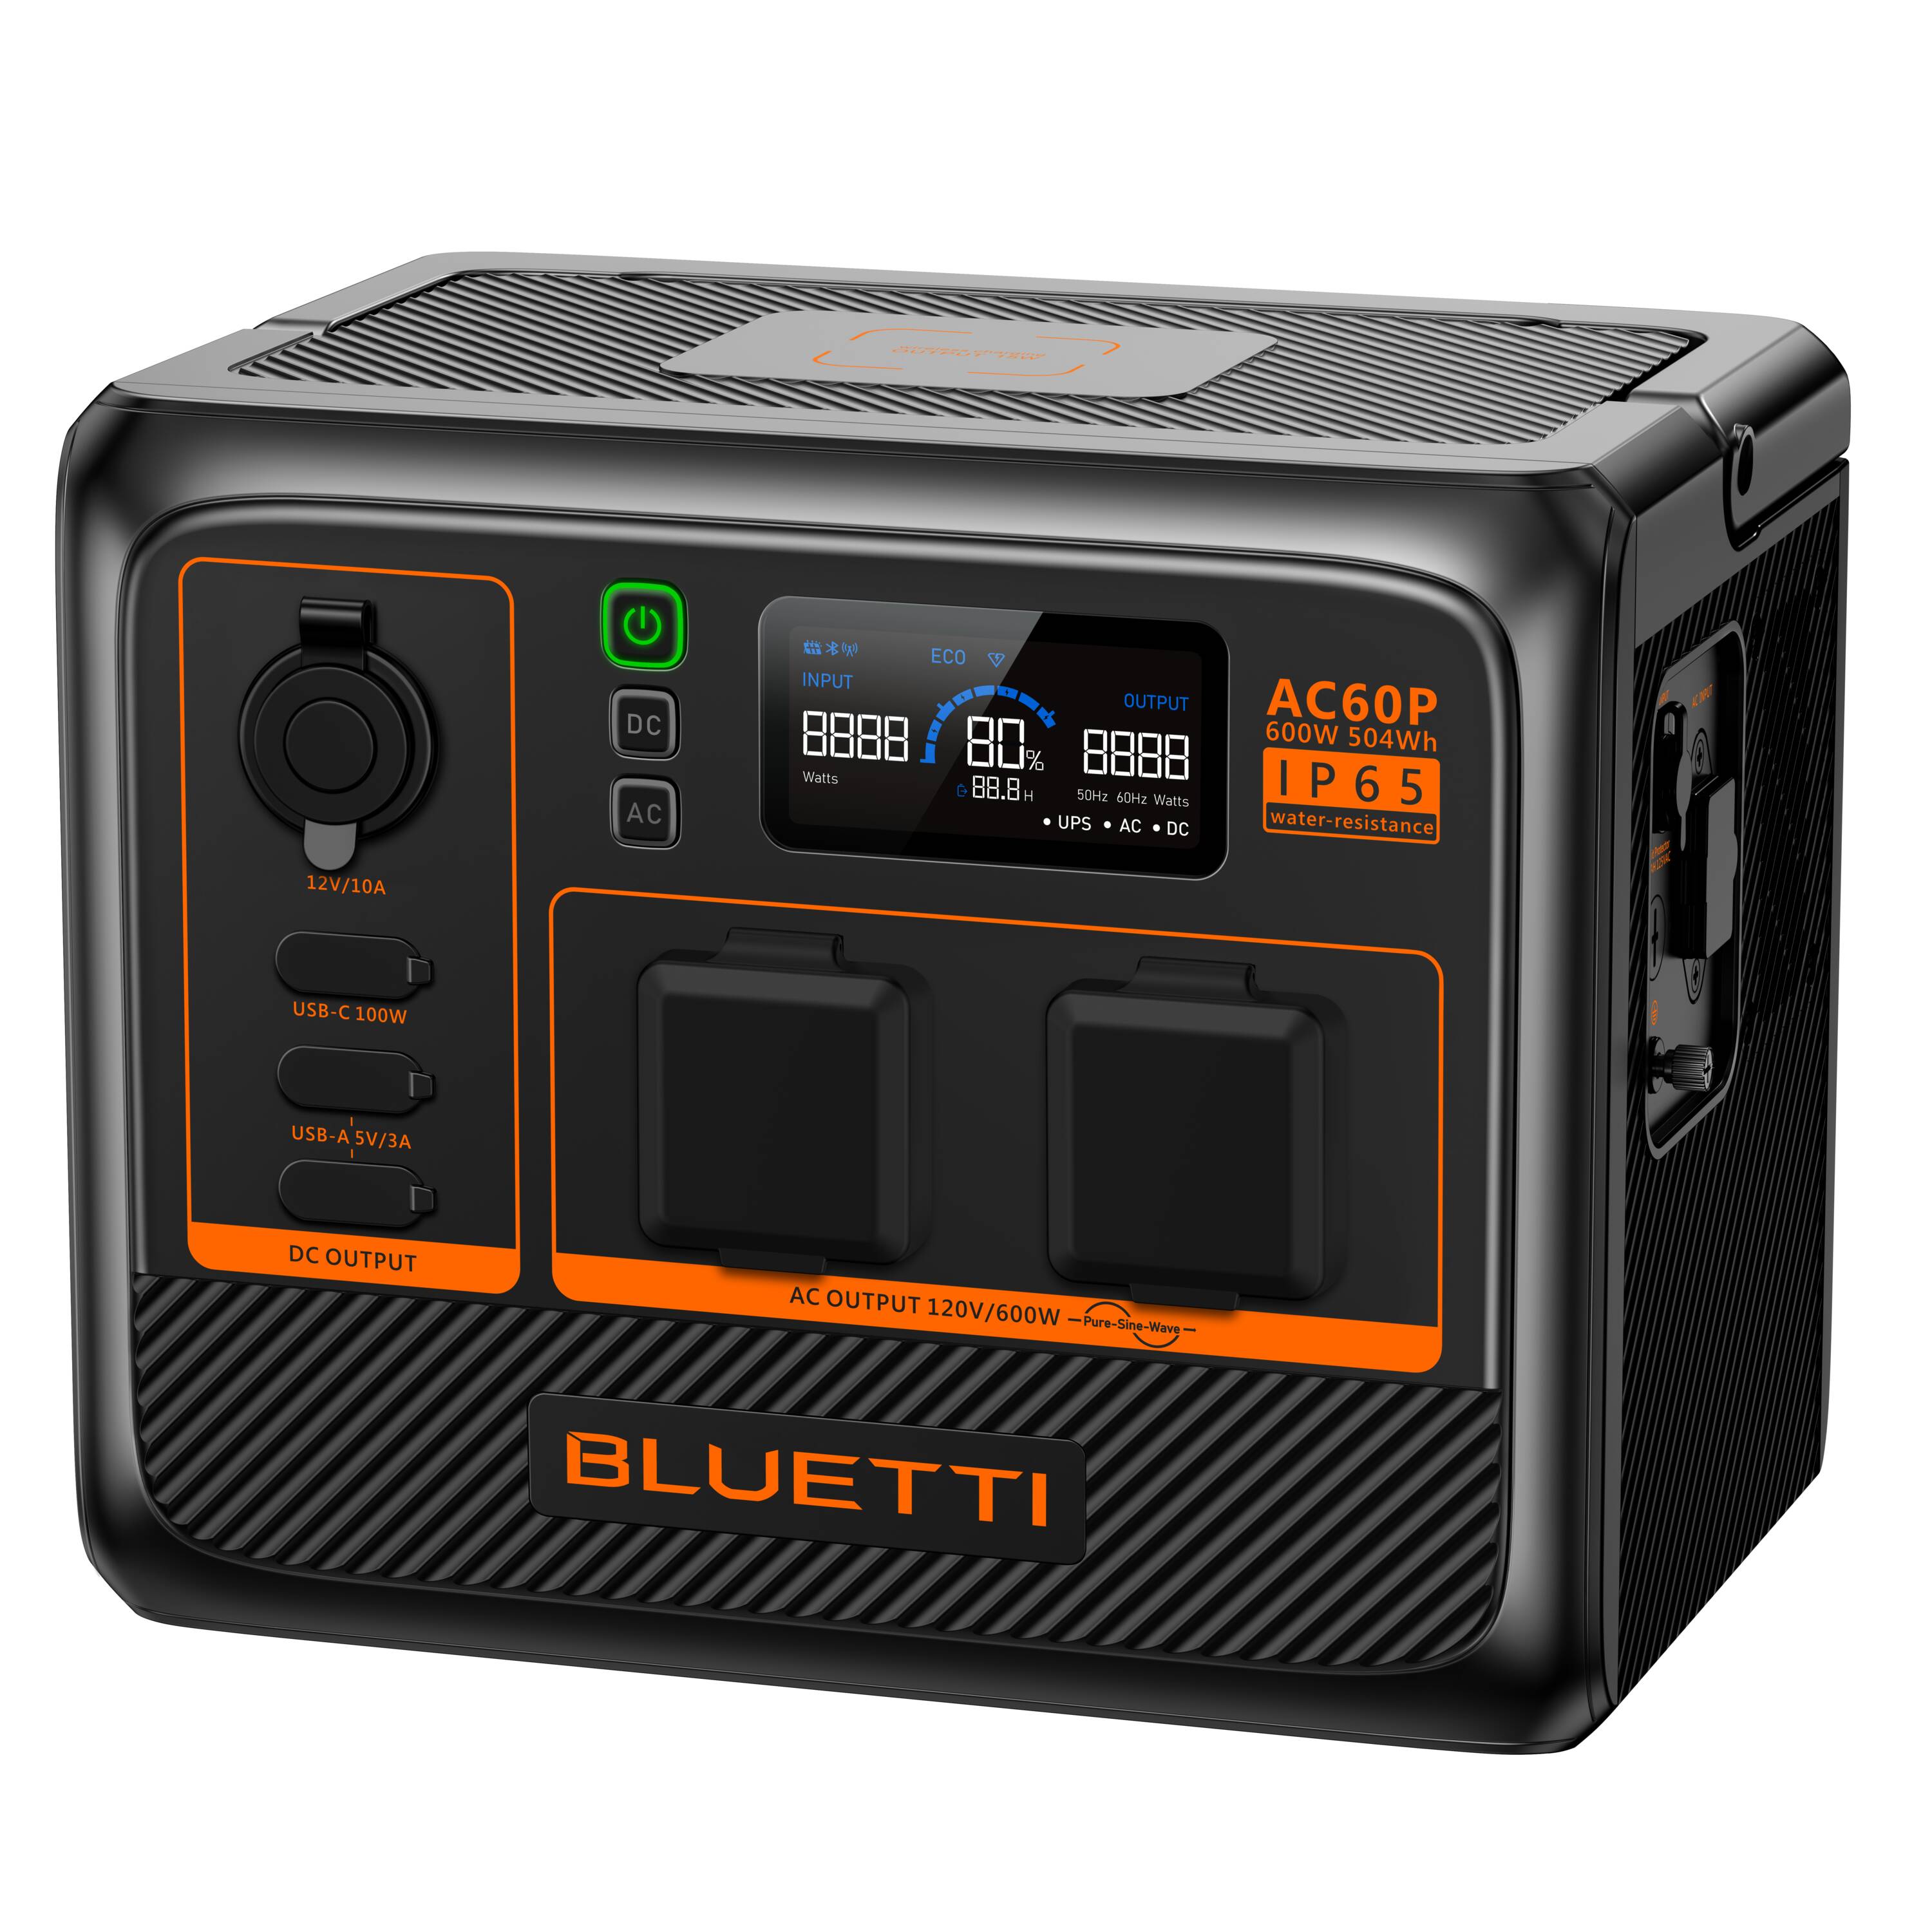 BLUETTI IP65 600-Watt Portable Power Station in the Portable Power